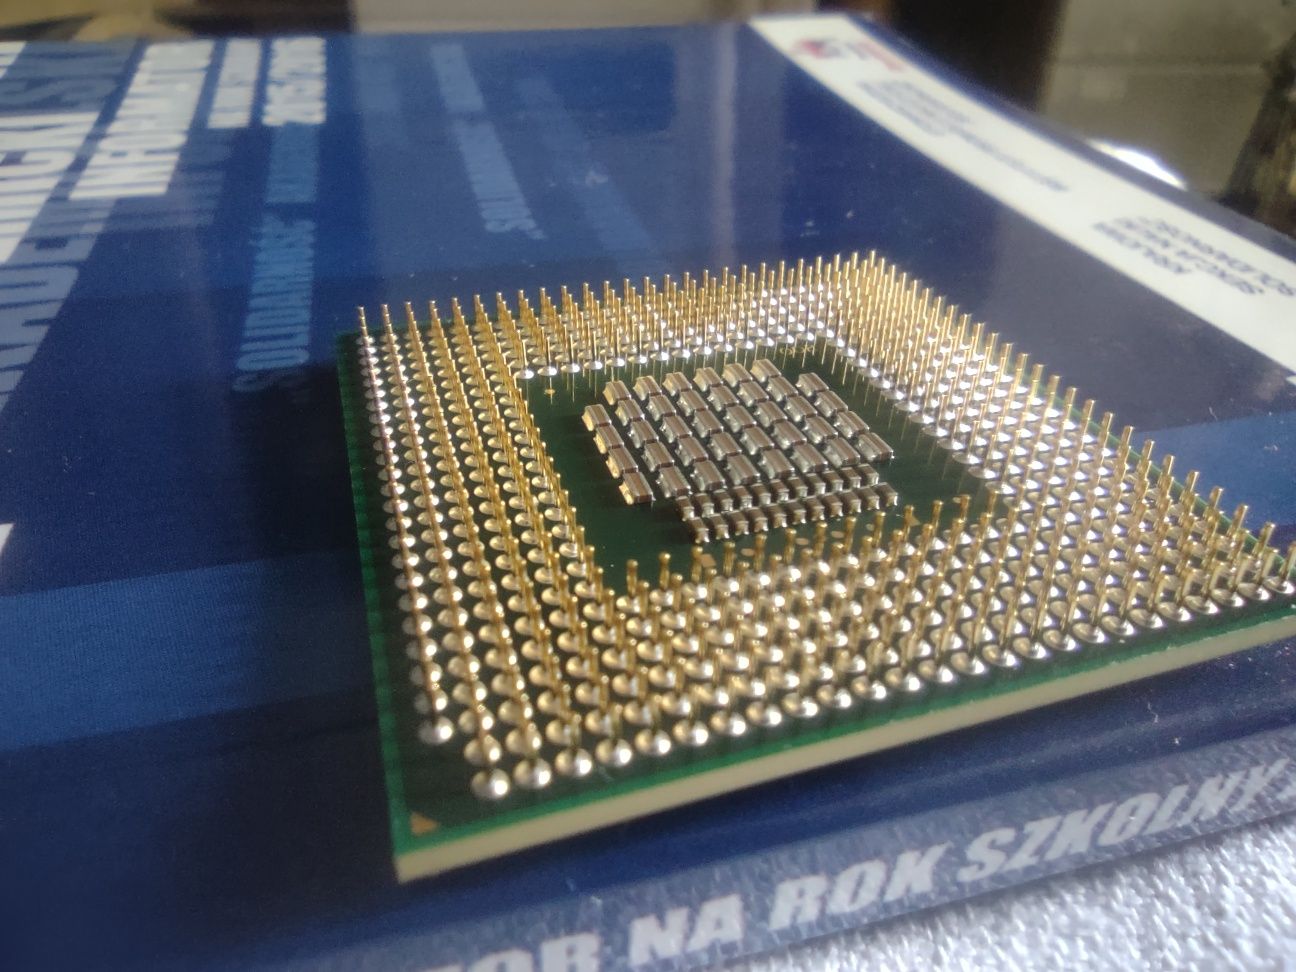 Procesor Intel Core 2 Duo T7500  2,2GHz Dell D630